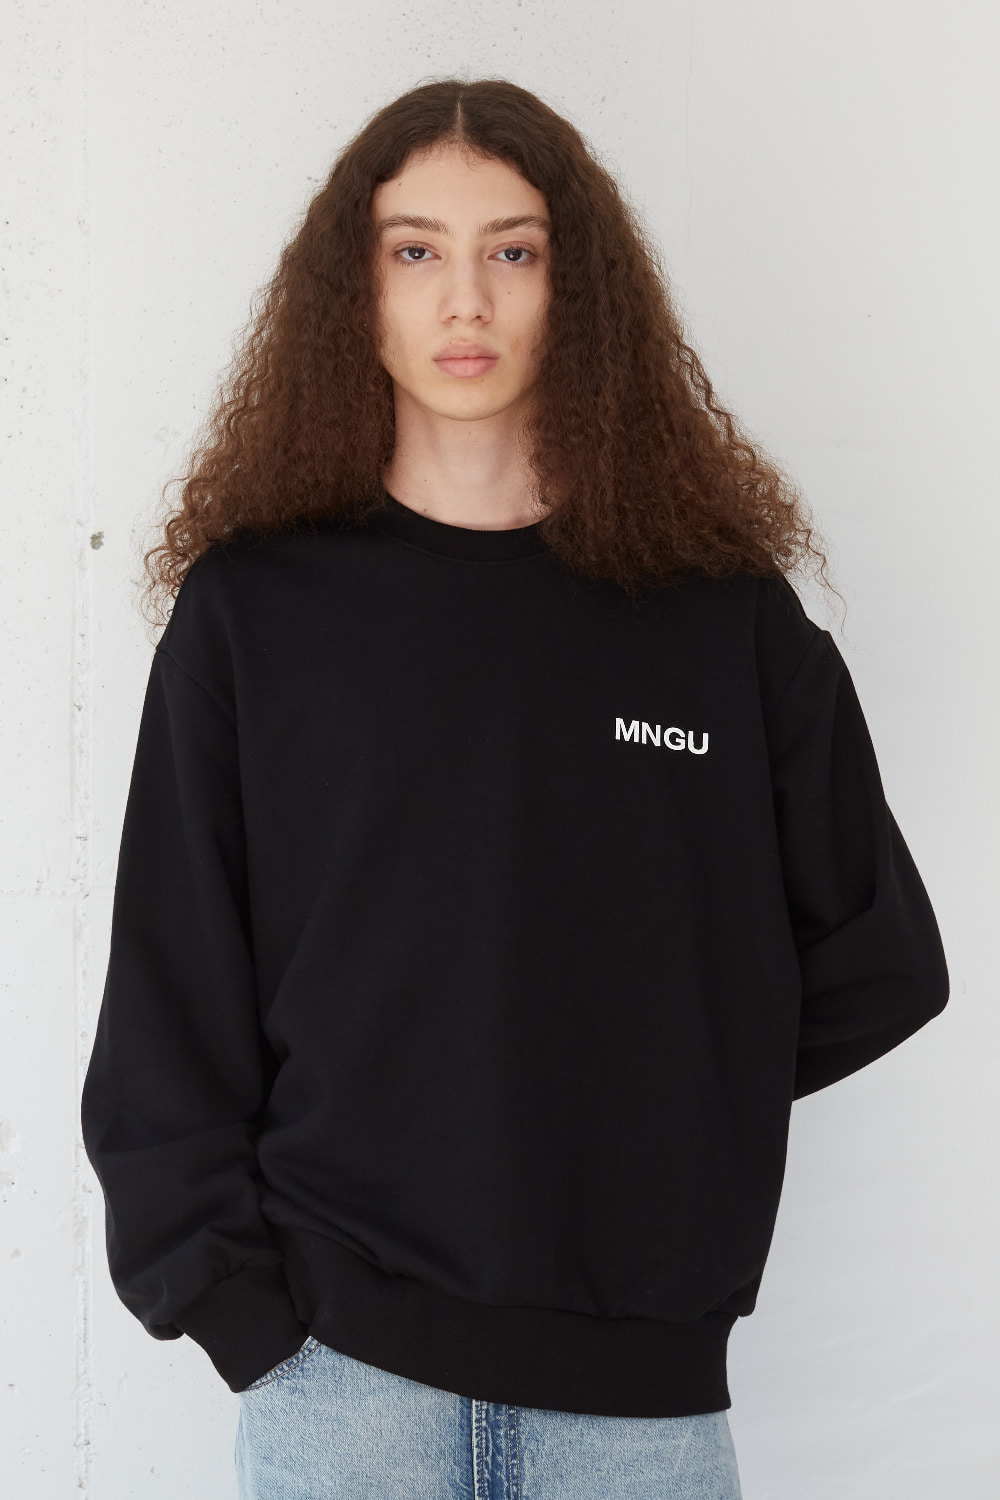 [-50%] MNGU 로고 스웨트셔츠 IN 블랙